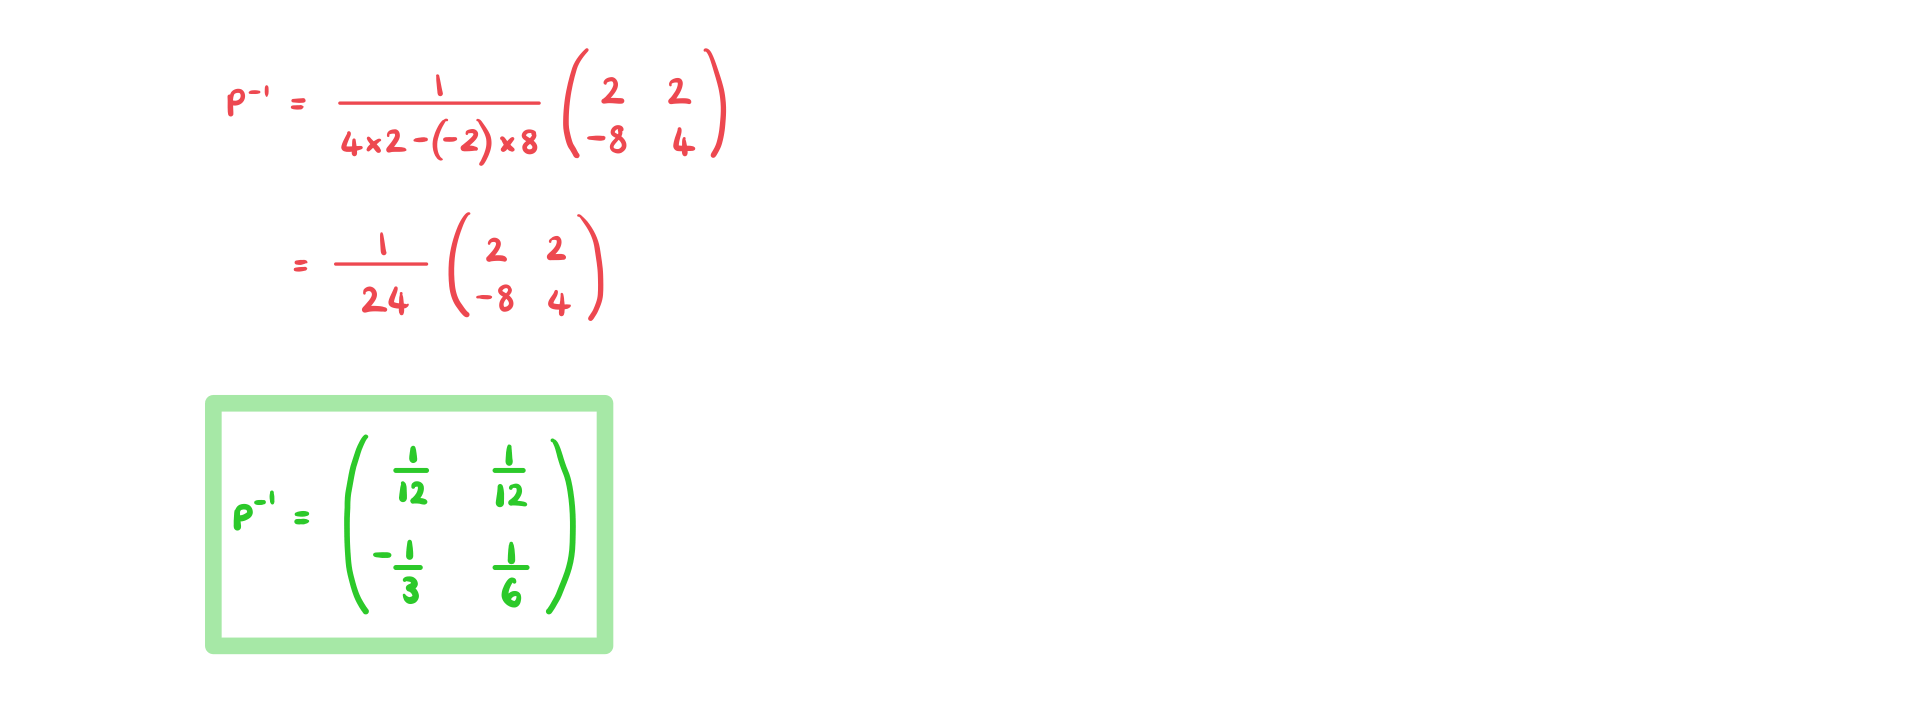 rn-1-7-matrices-copy